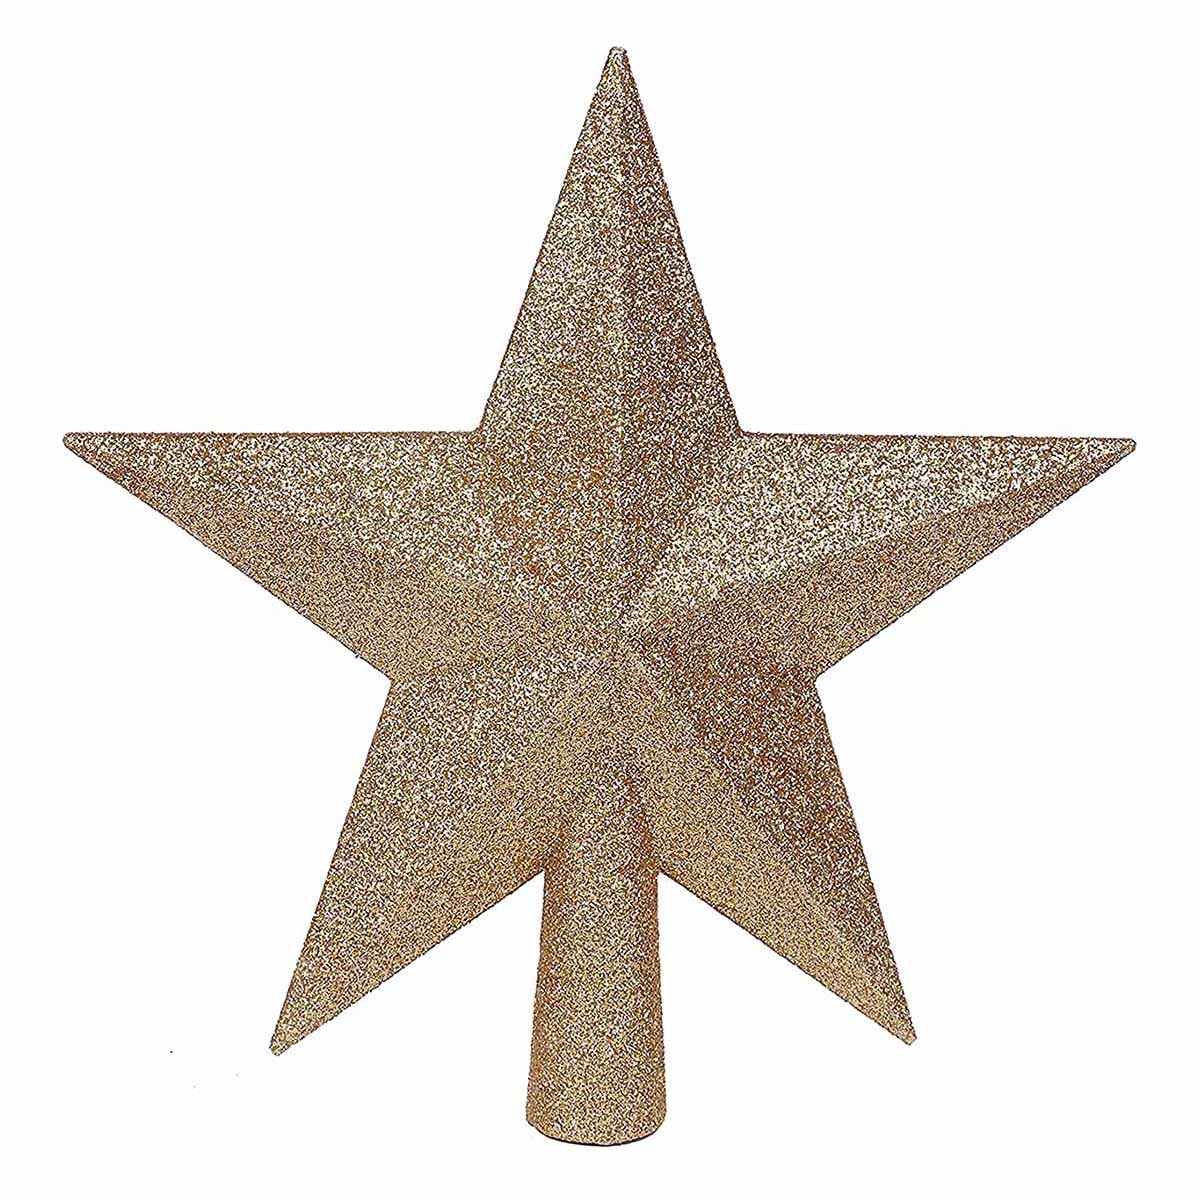 One Pack Large Glitter Star Tree Topper,10″-U Pick